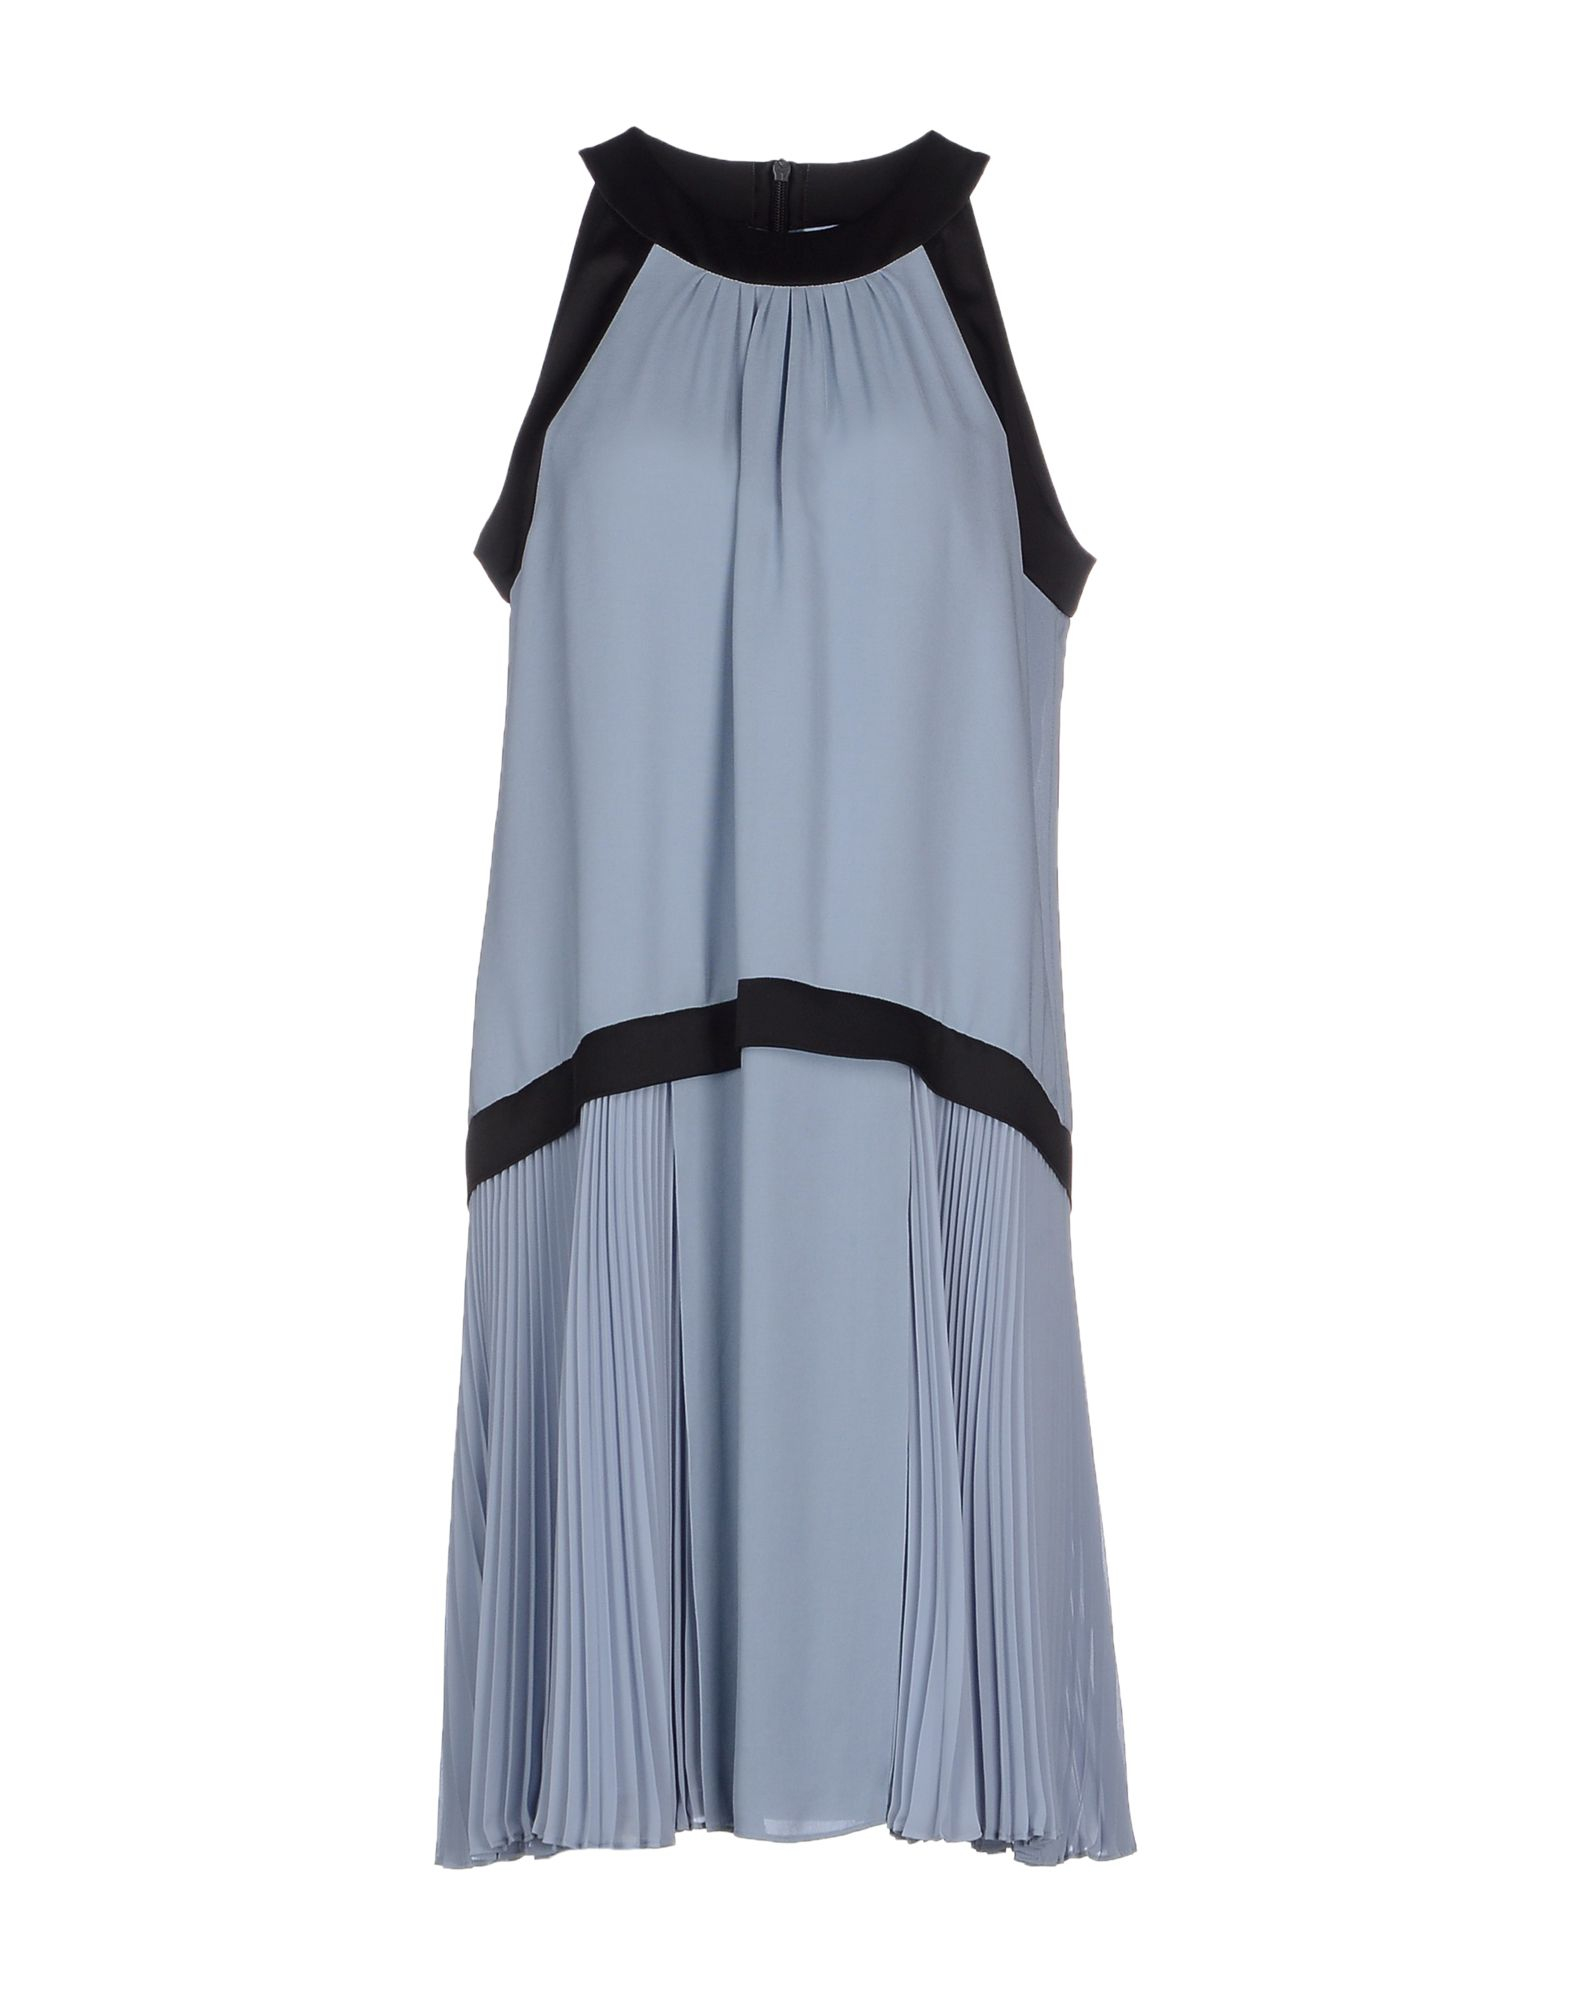 Philosophy di alberta ferretti Knee-length Dress in Blue (Sky blue) | Lyst